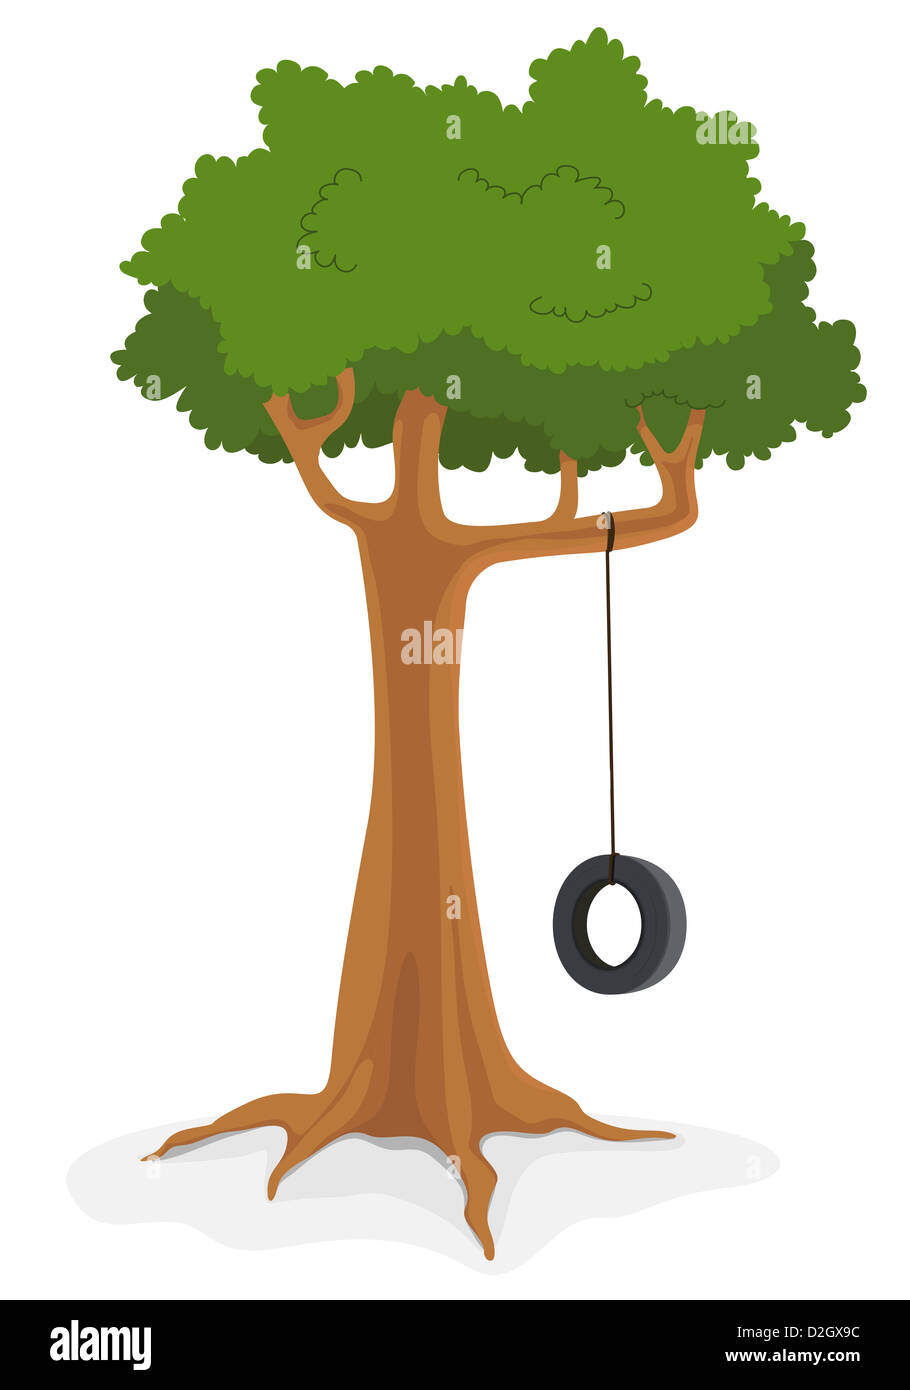 Illustration of cartoon swing on a tree Stock Photo - Alamy